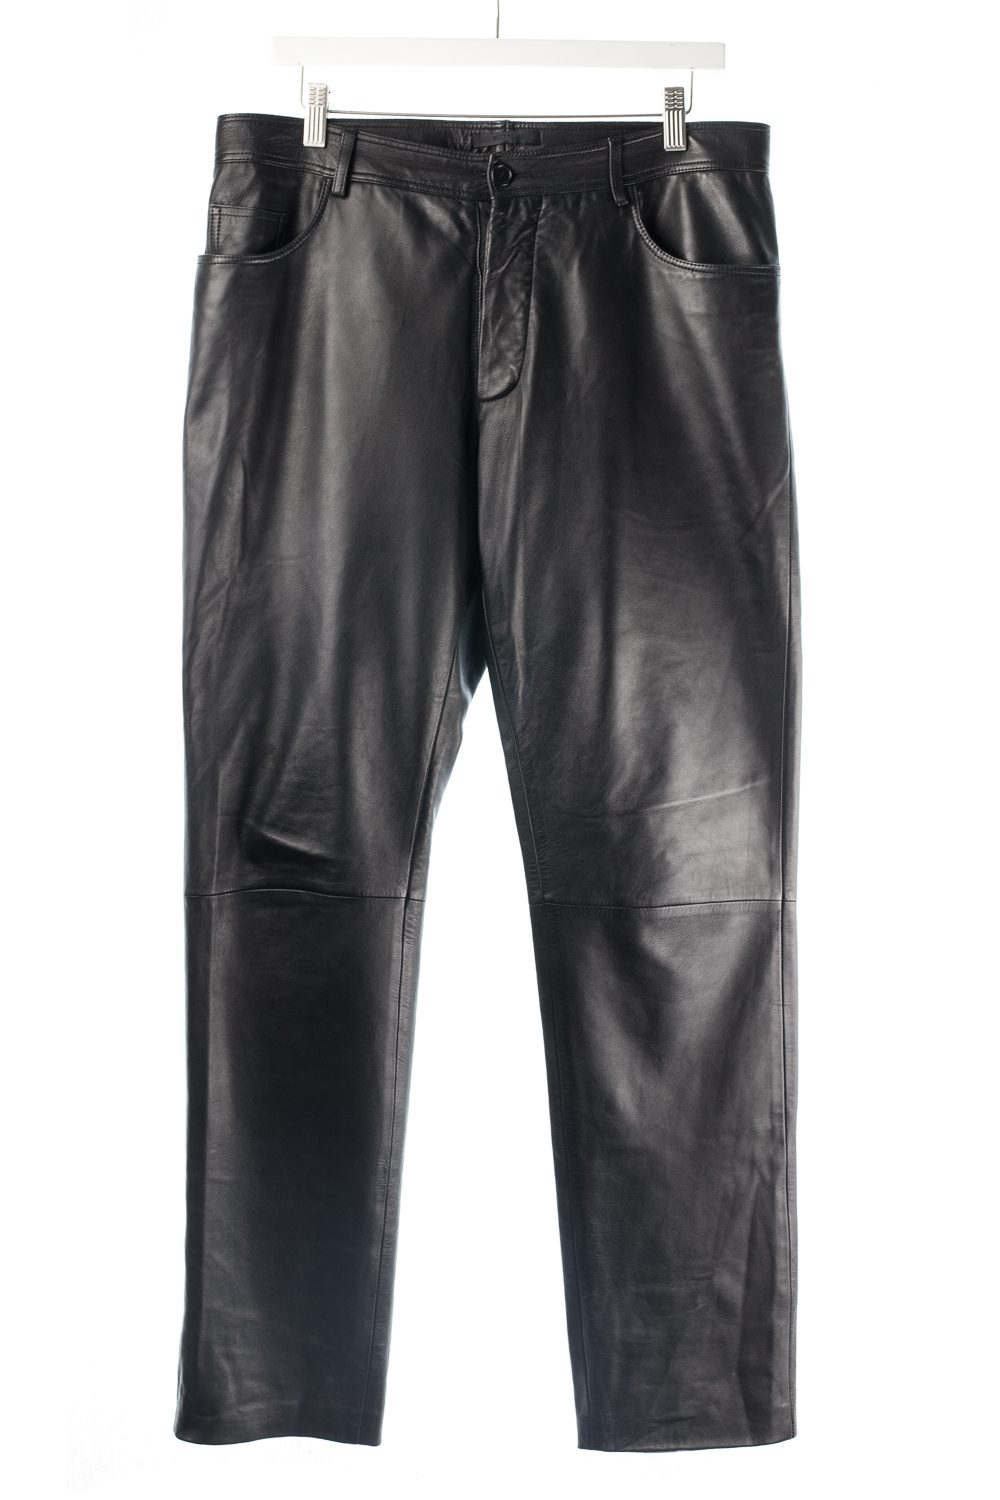 FW03 Calf Leather Pants